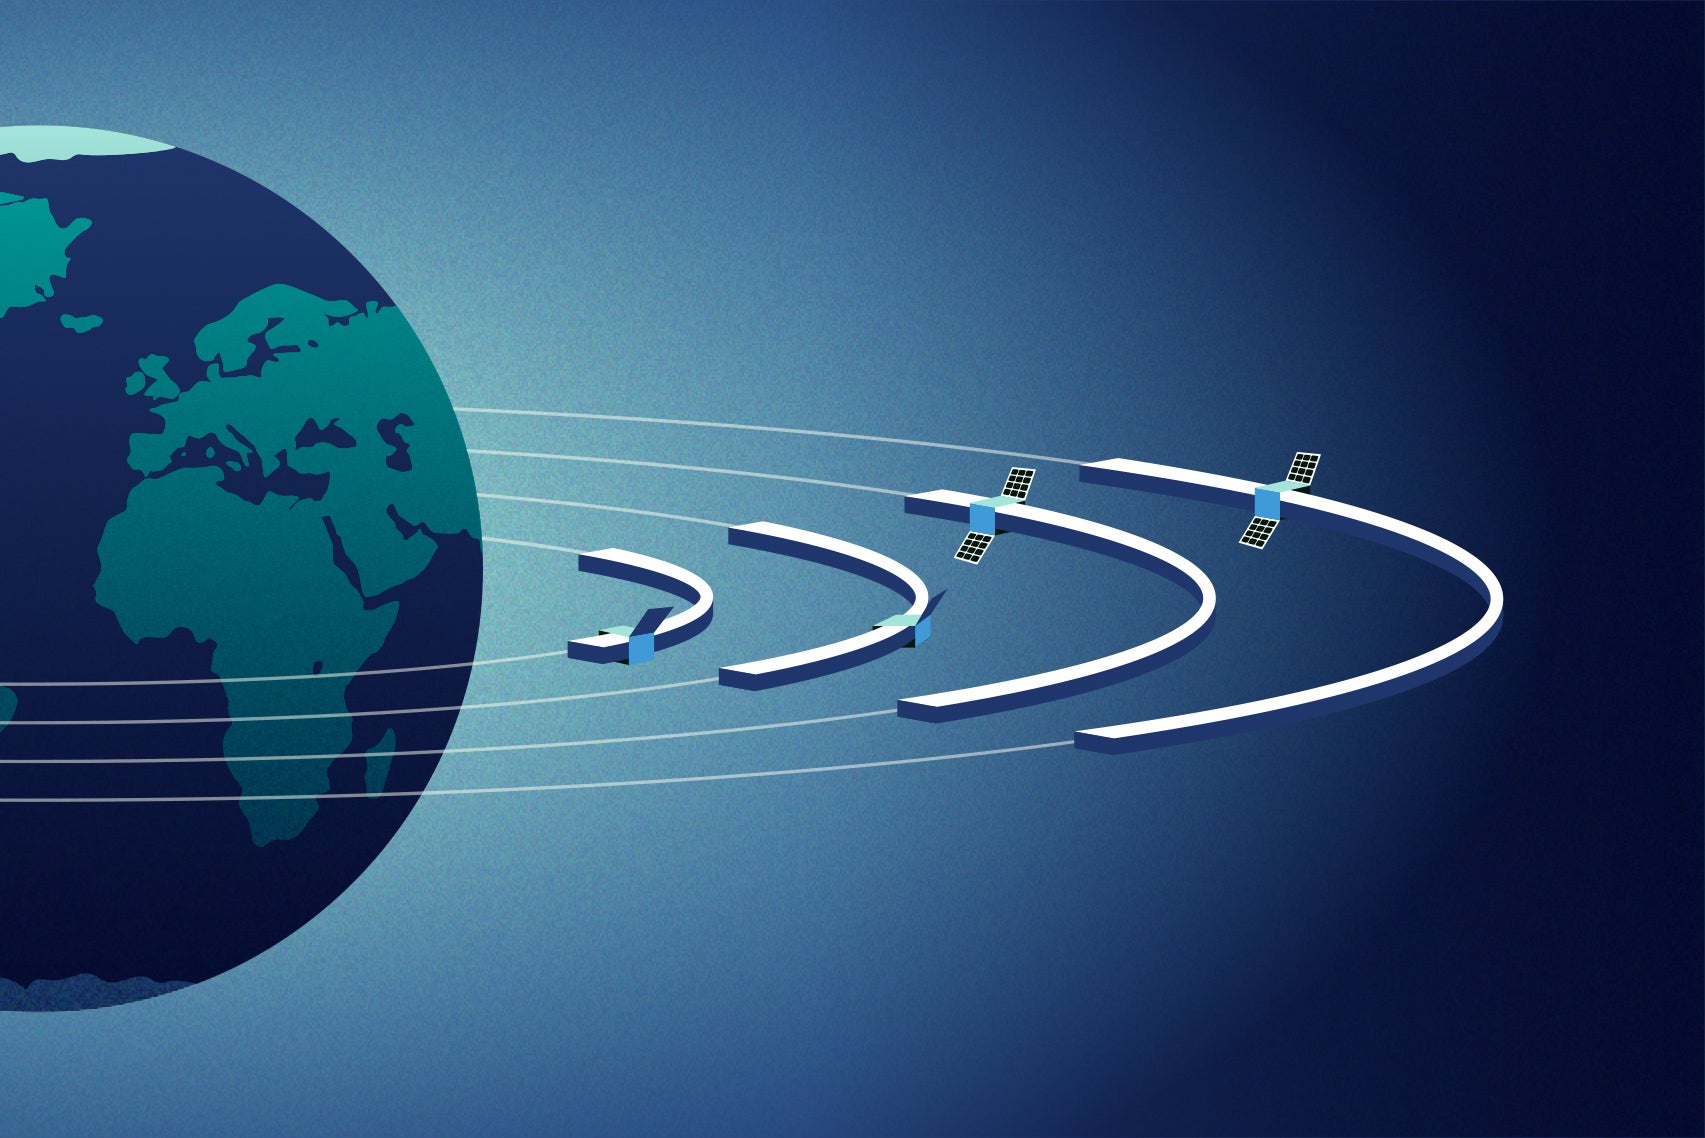 Internet signal icon around Earth's orbit. 